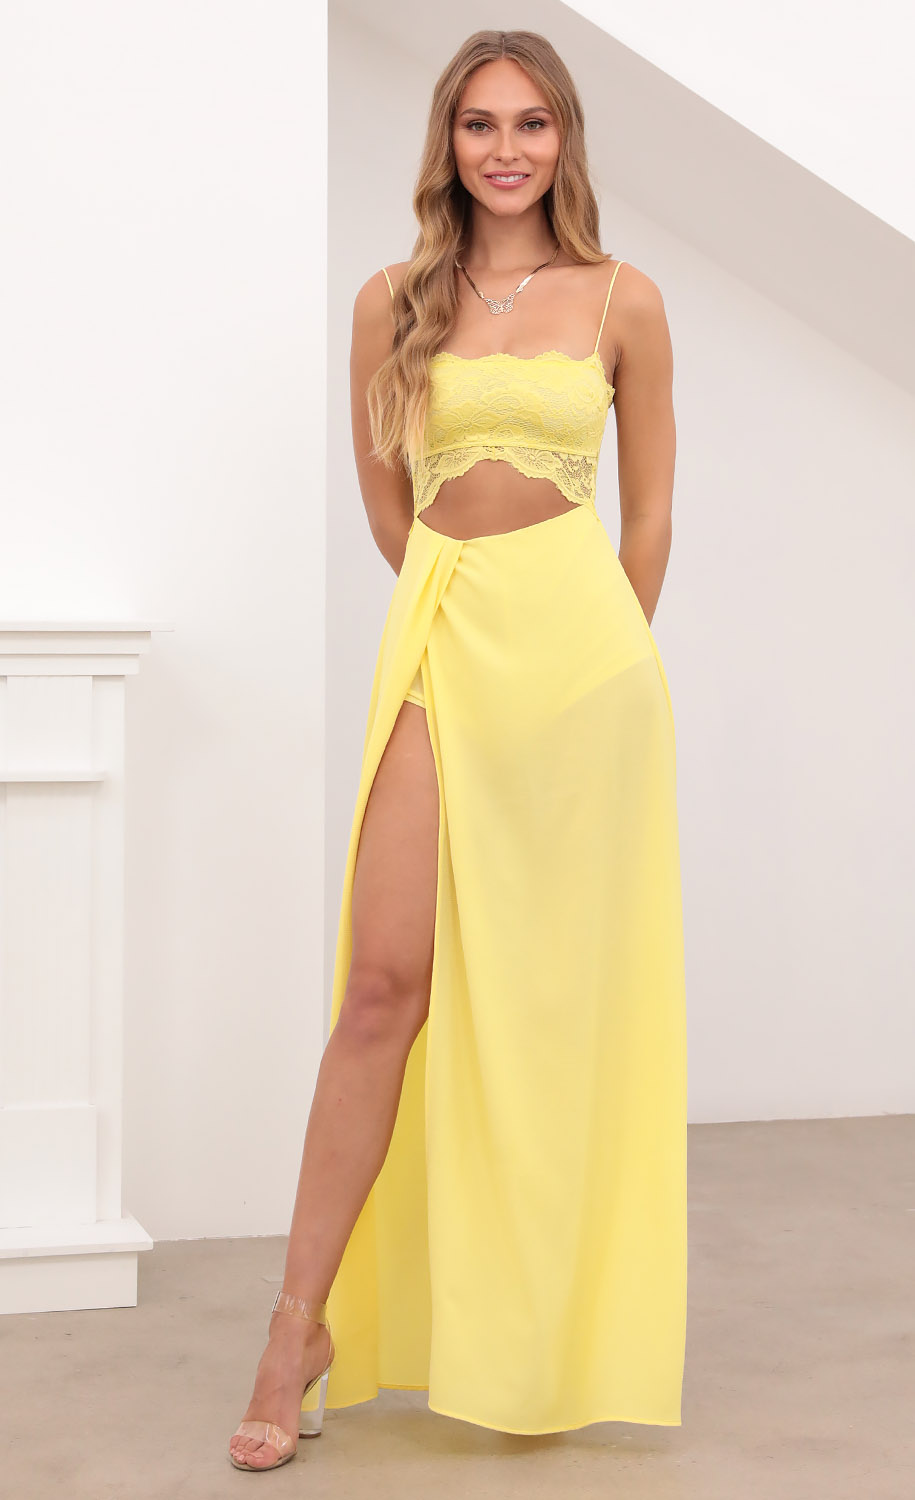 Cutout Maxi Dress in Yellow Lace